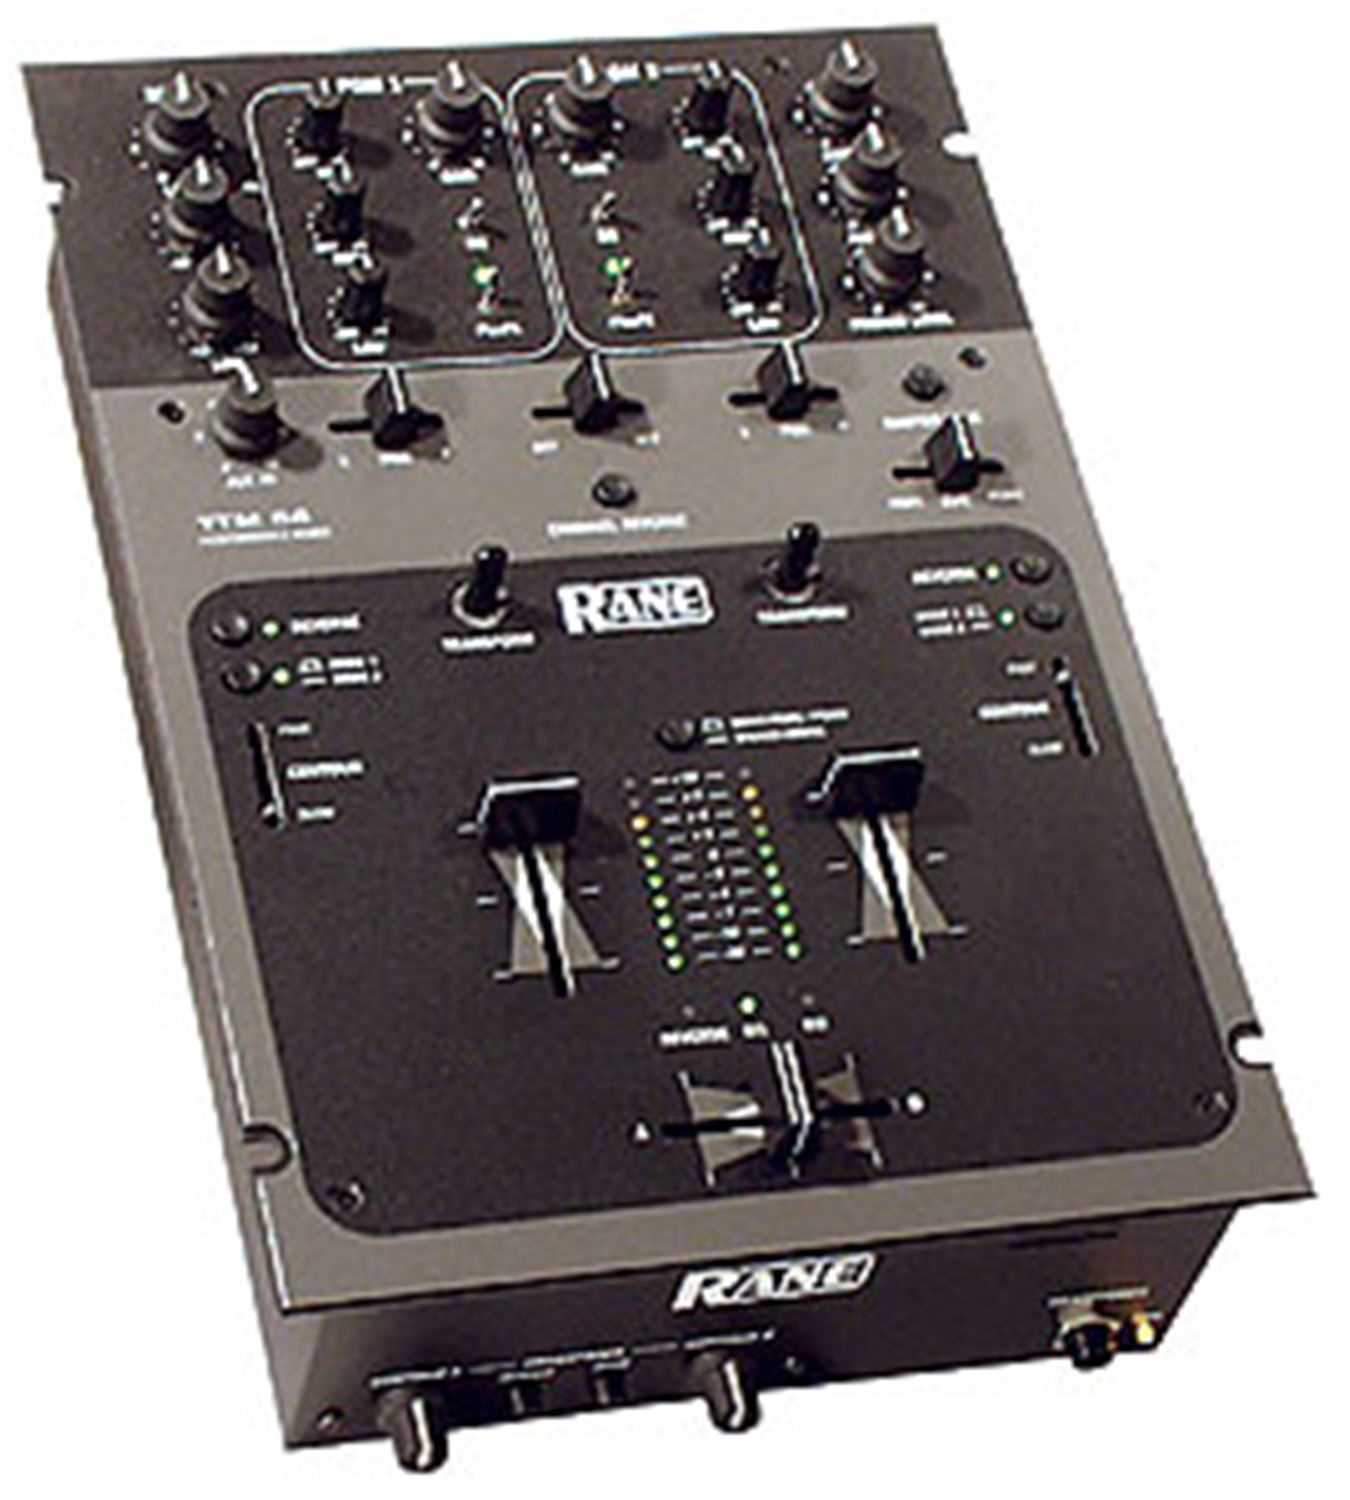 RANE TTM56 Professional DJ Scratch Mixer - PSSL ProSound and Stage Lighting